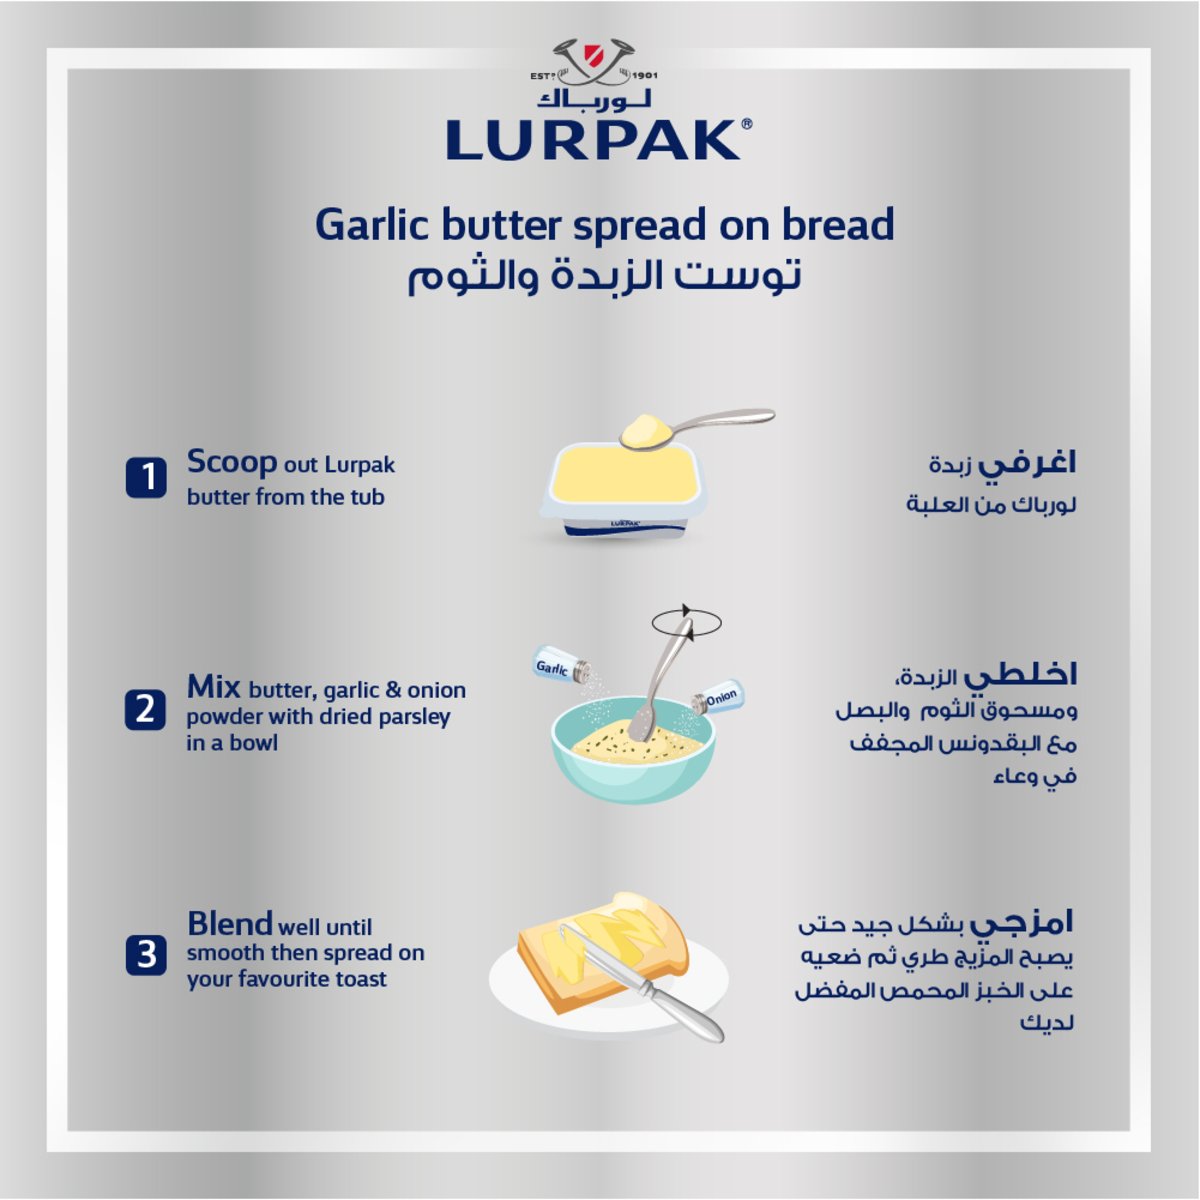 Lurpak Spreadable Butter Salted 500g